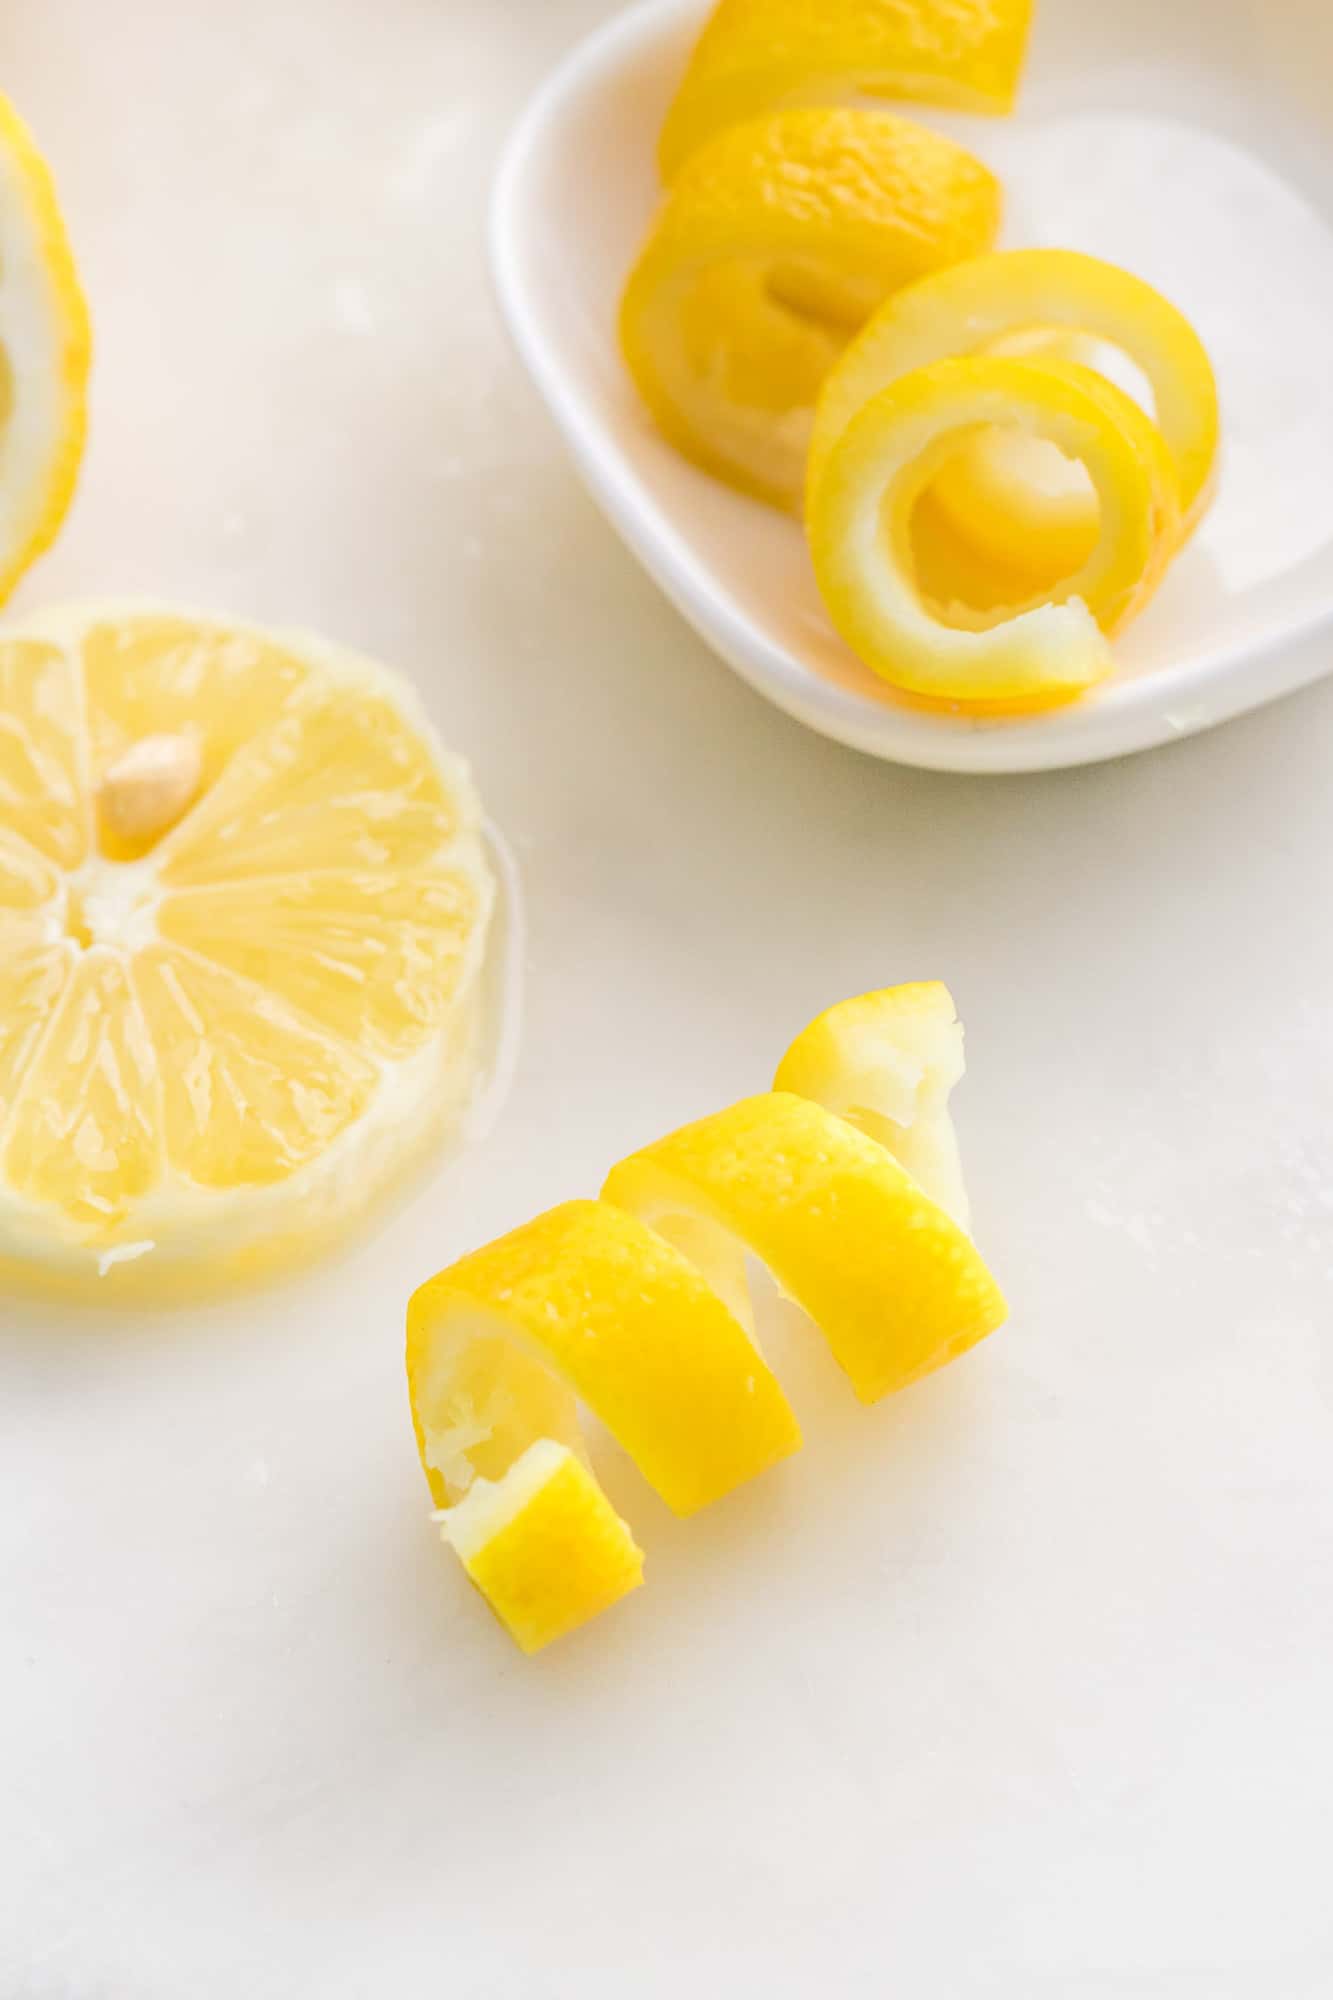 Lemon twist on a white surface.